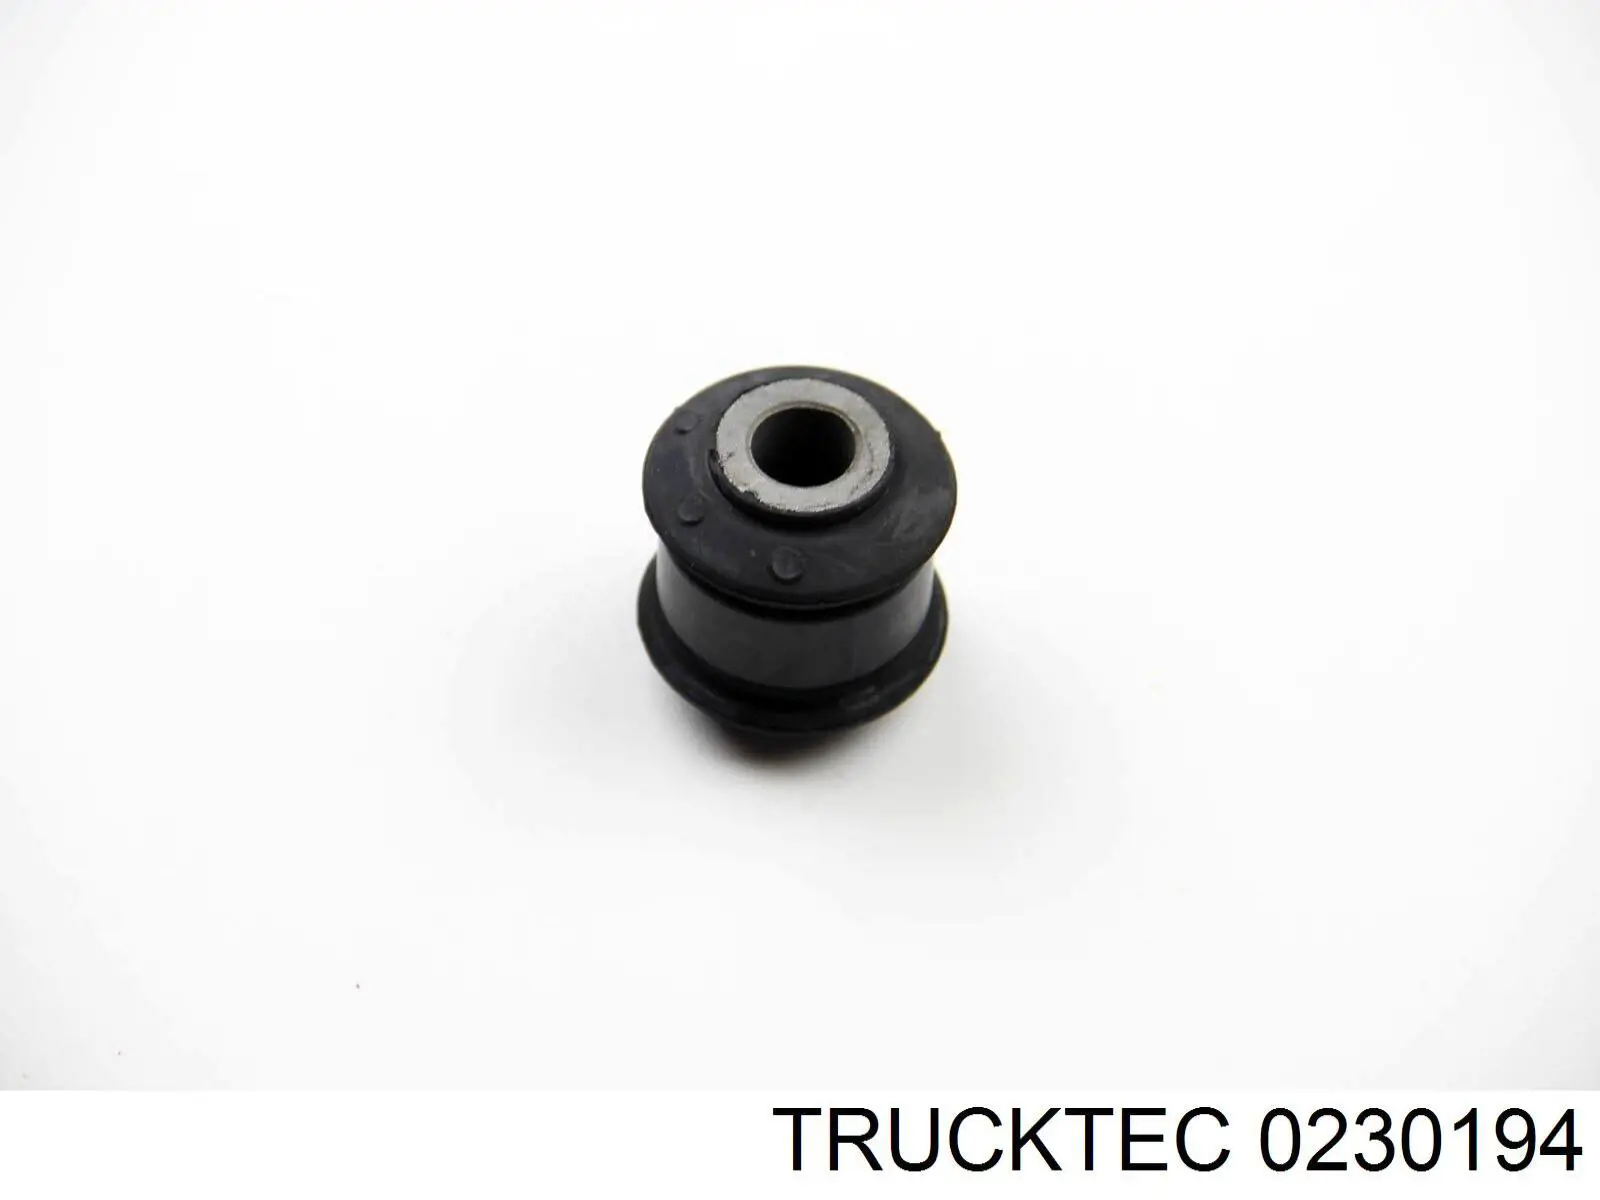 02.30.194 Trucktec soporte de estabilizador trasero exterior